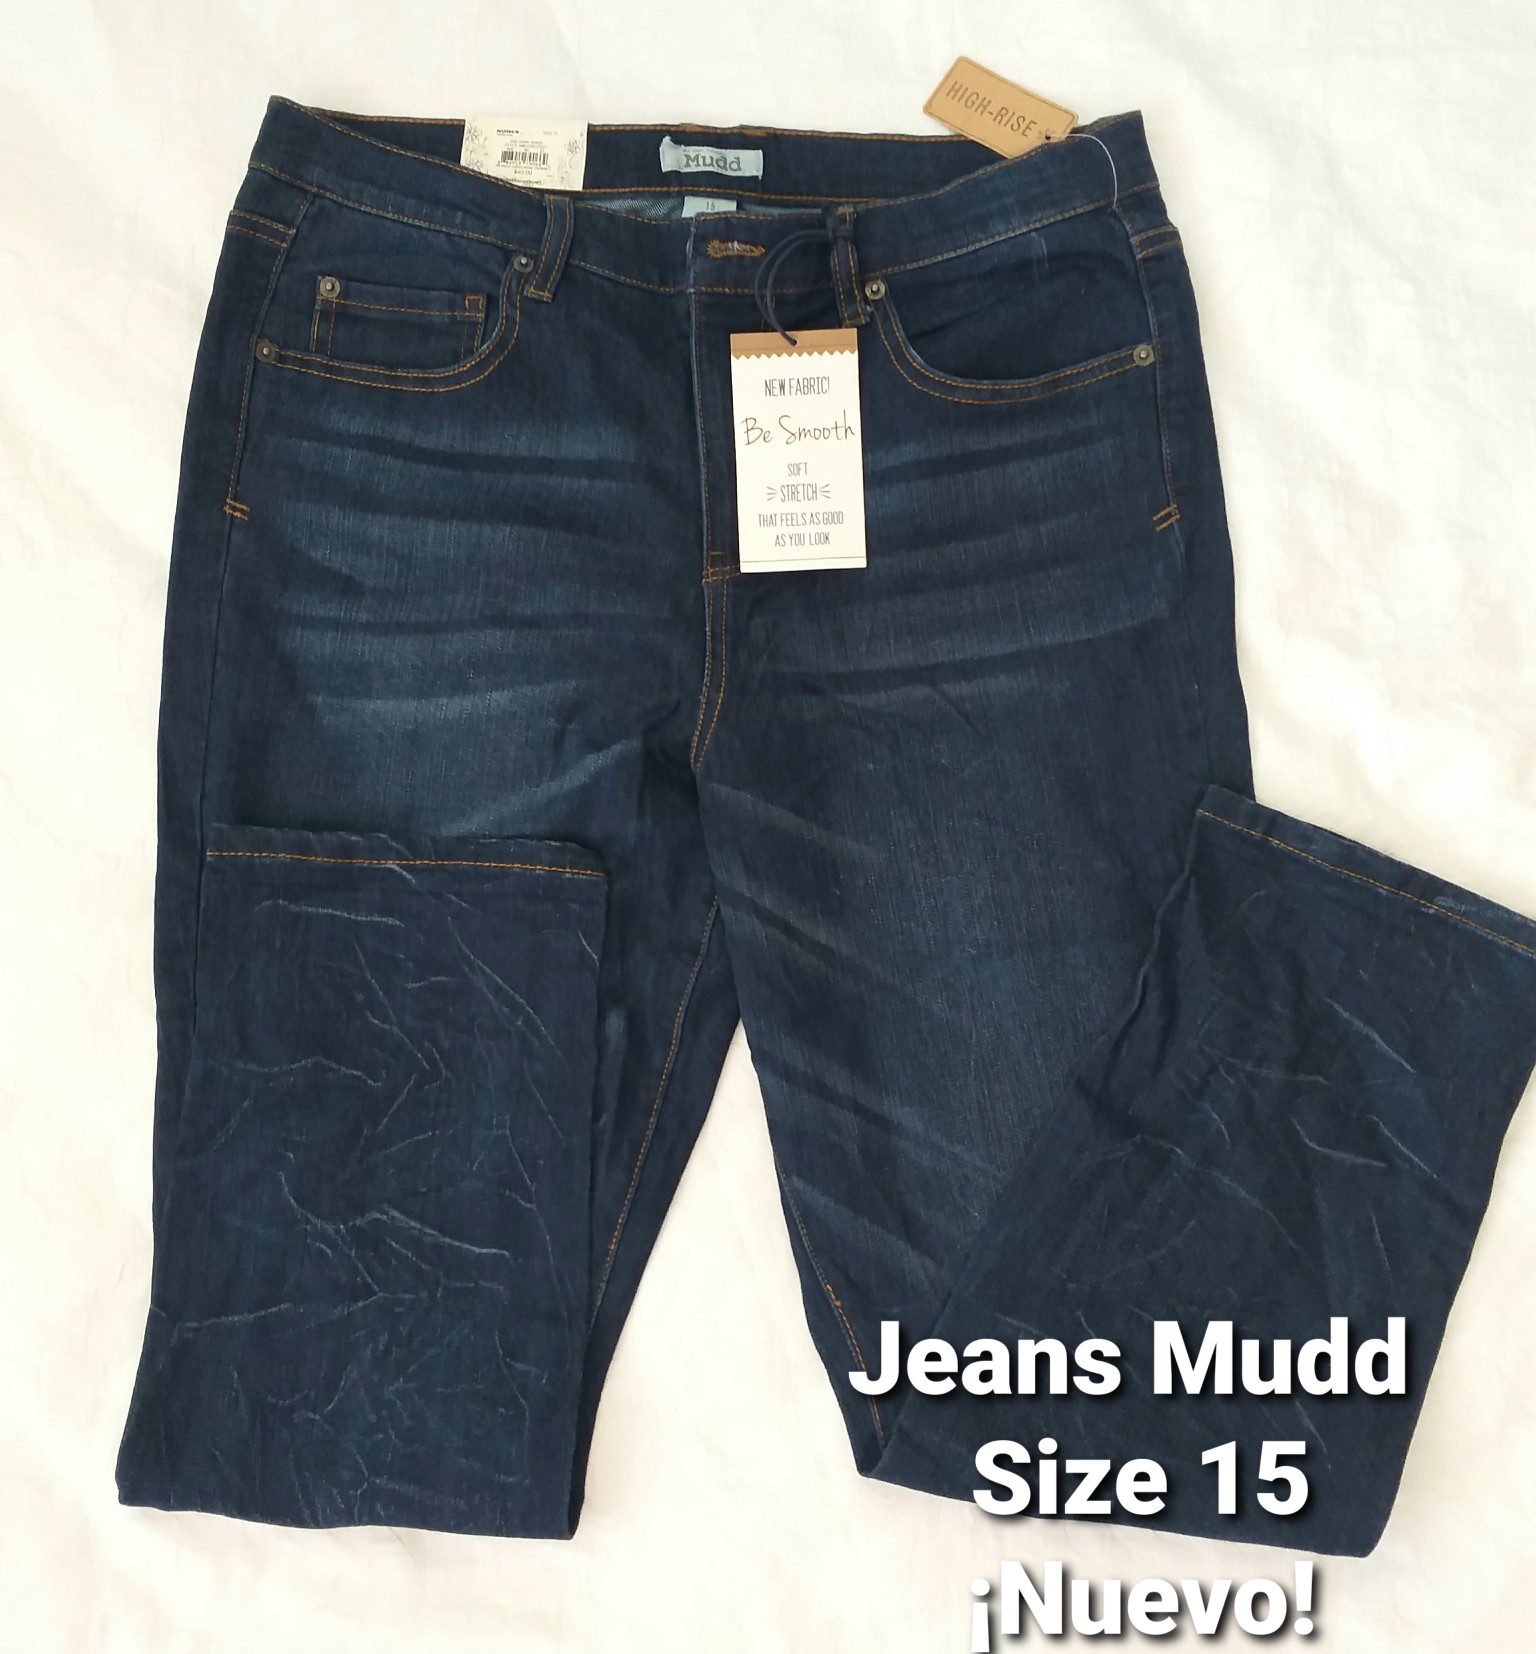 ropa para mujer - Jeans Mudd mujer. ¡Nuevo! Size 15